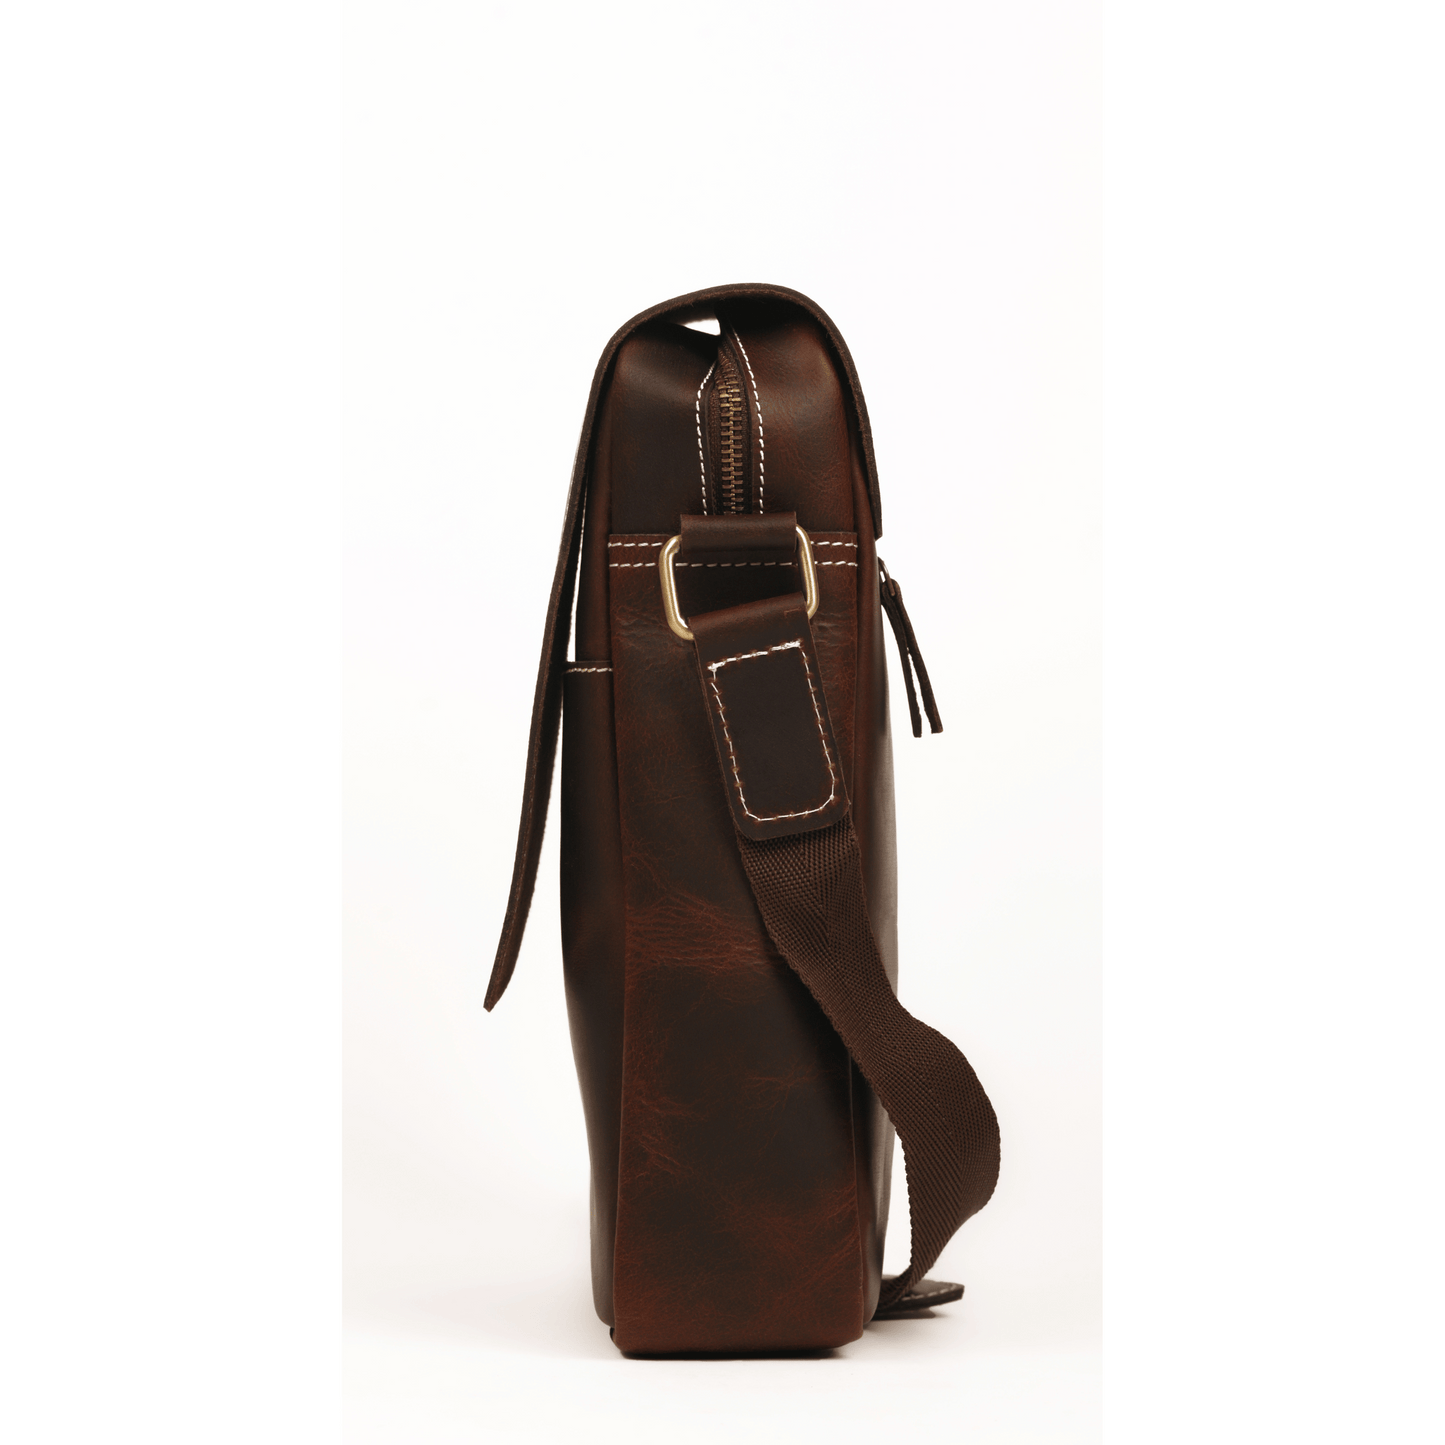 Zipper crossover Genuine Leather Cross Body Bag Muddy Brown